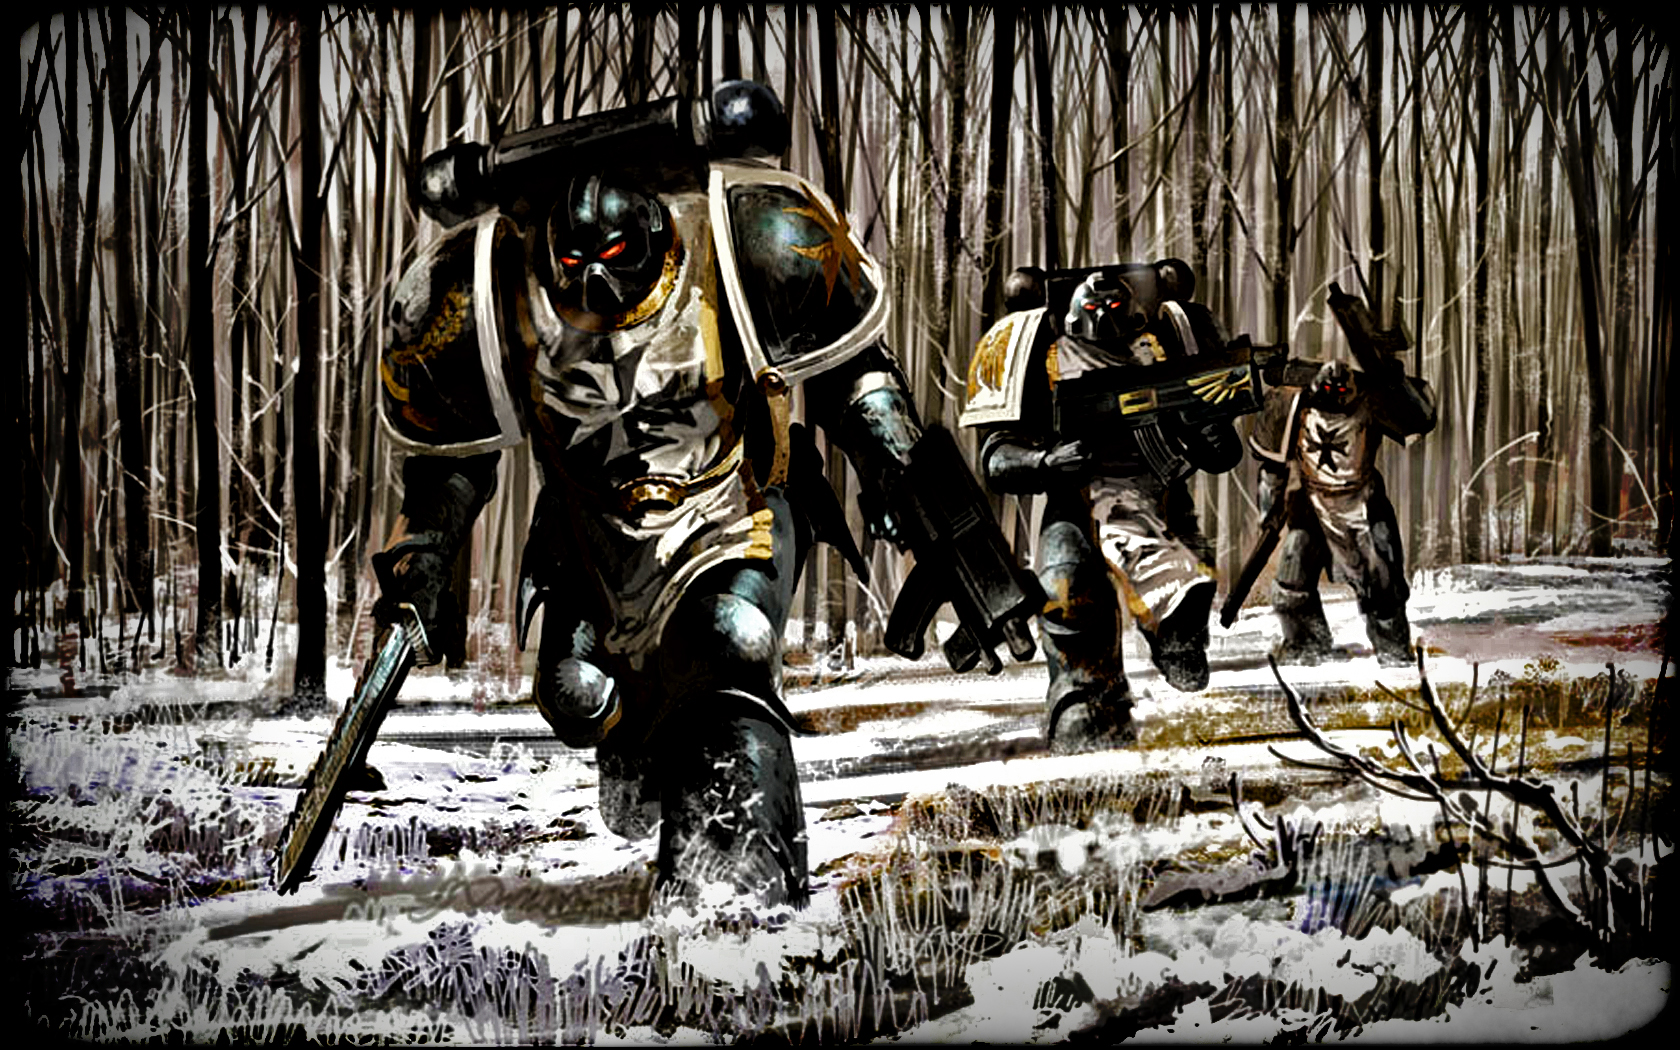 Soldier navigating snowy forest in Warhammer.